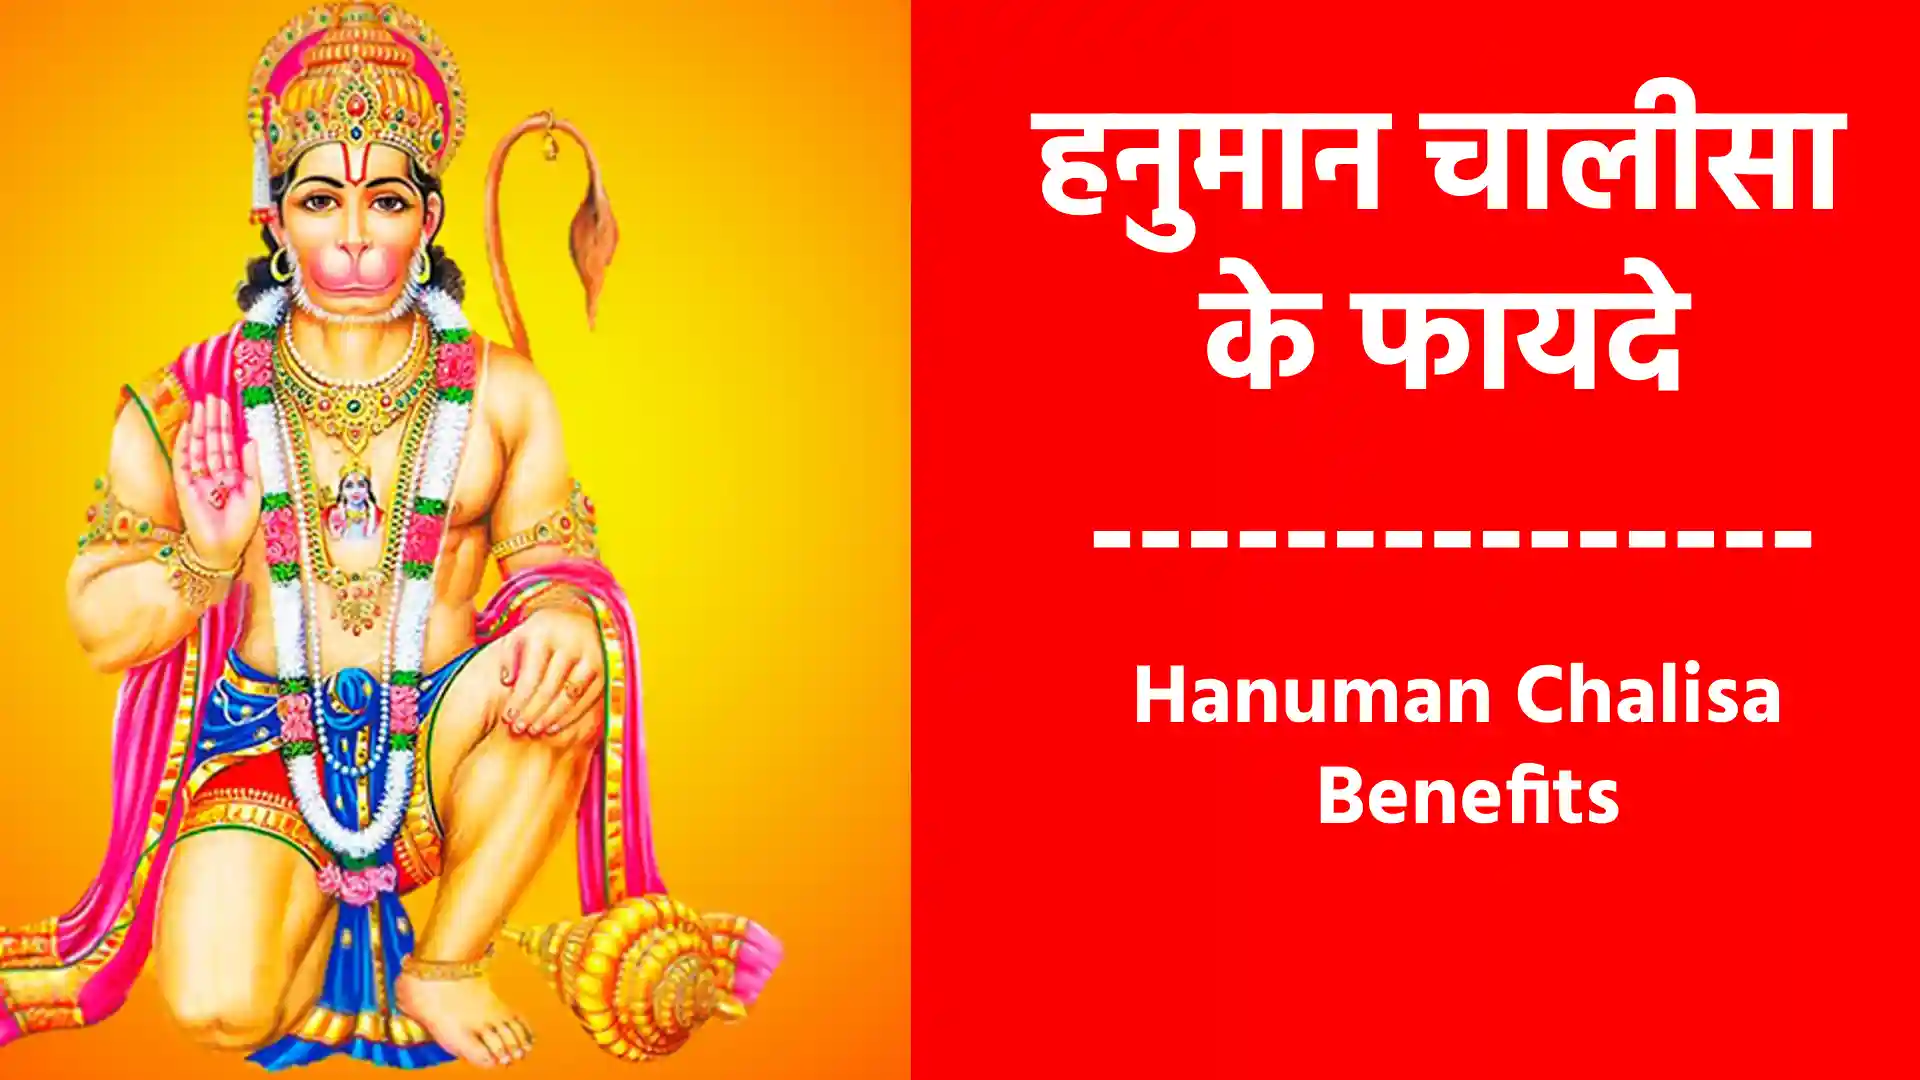 हनुमान चालीसा के फायदे | Hanuman Chalisa Benefits